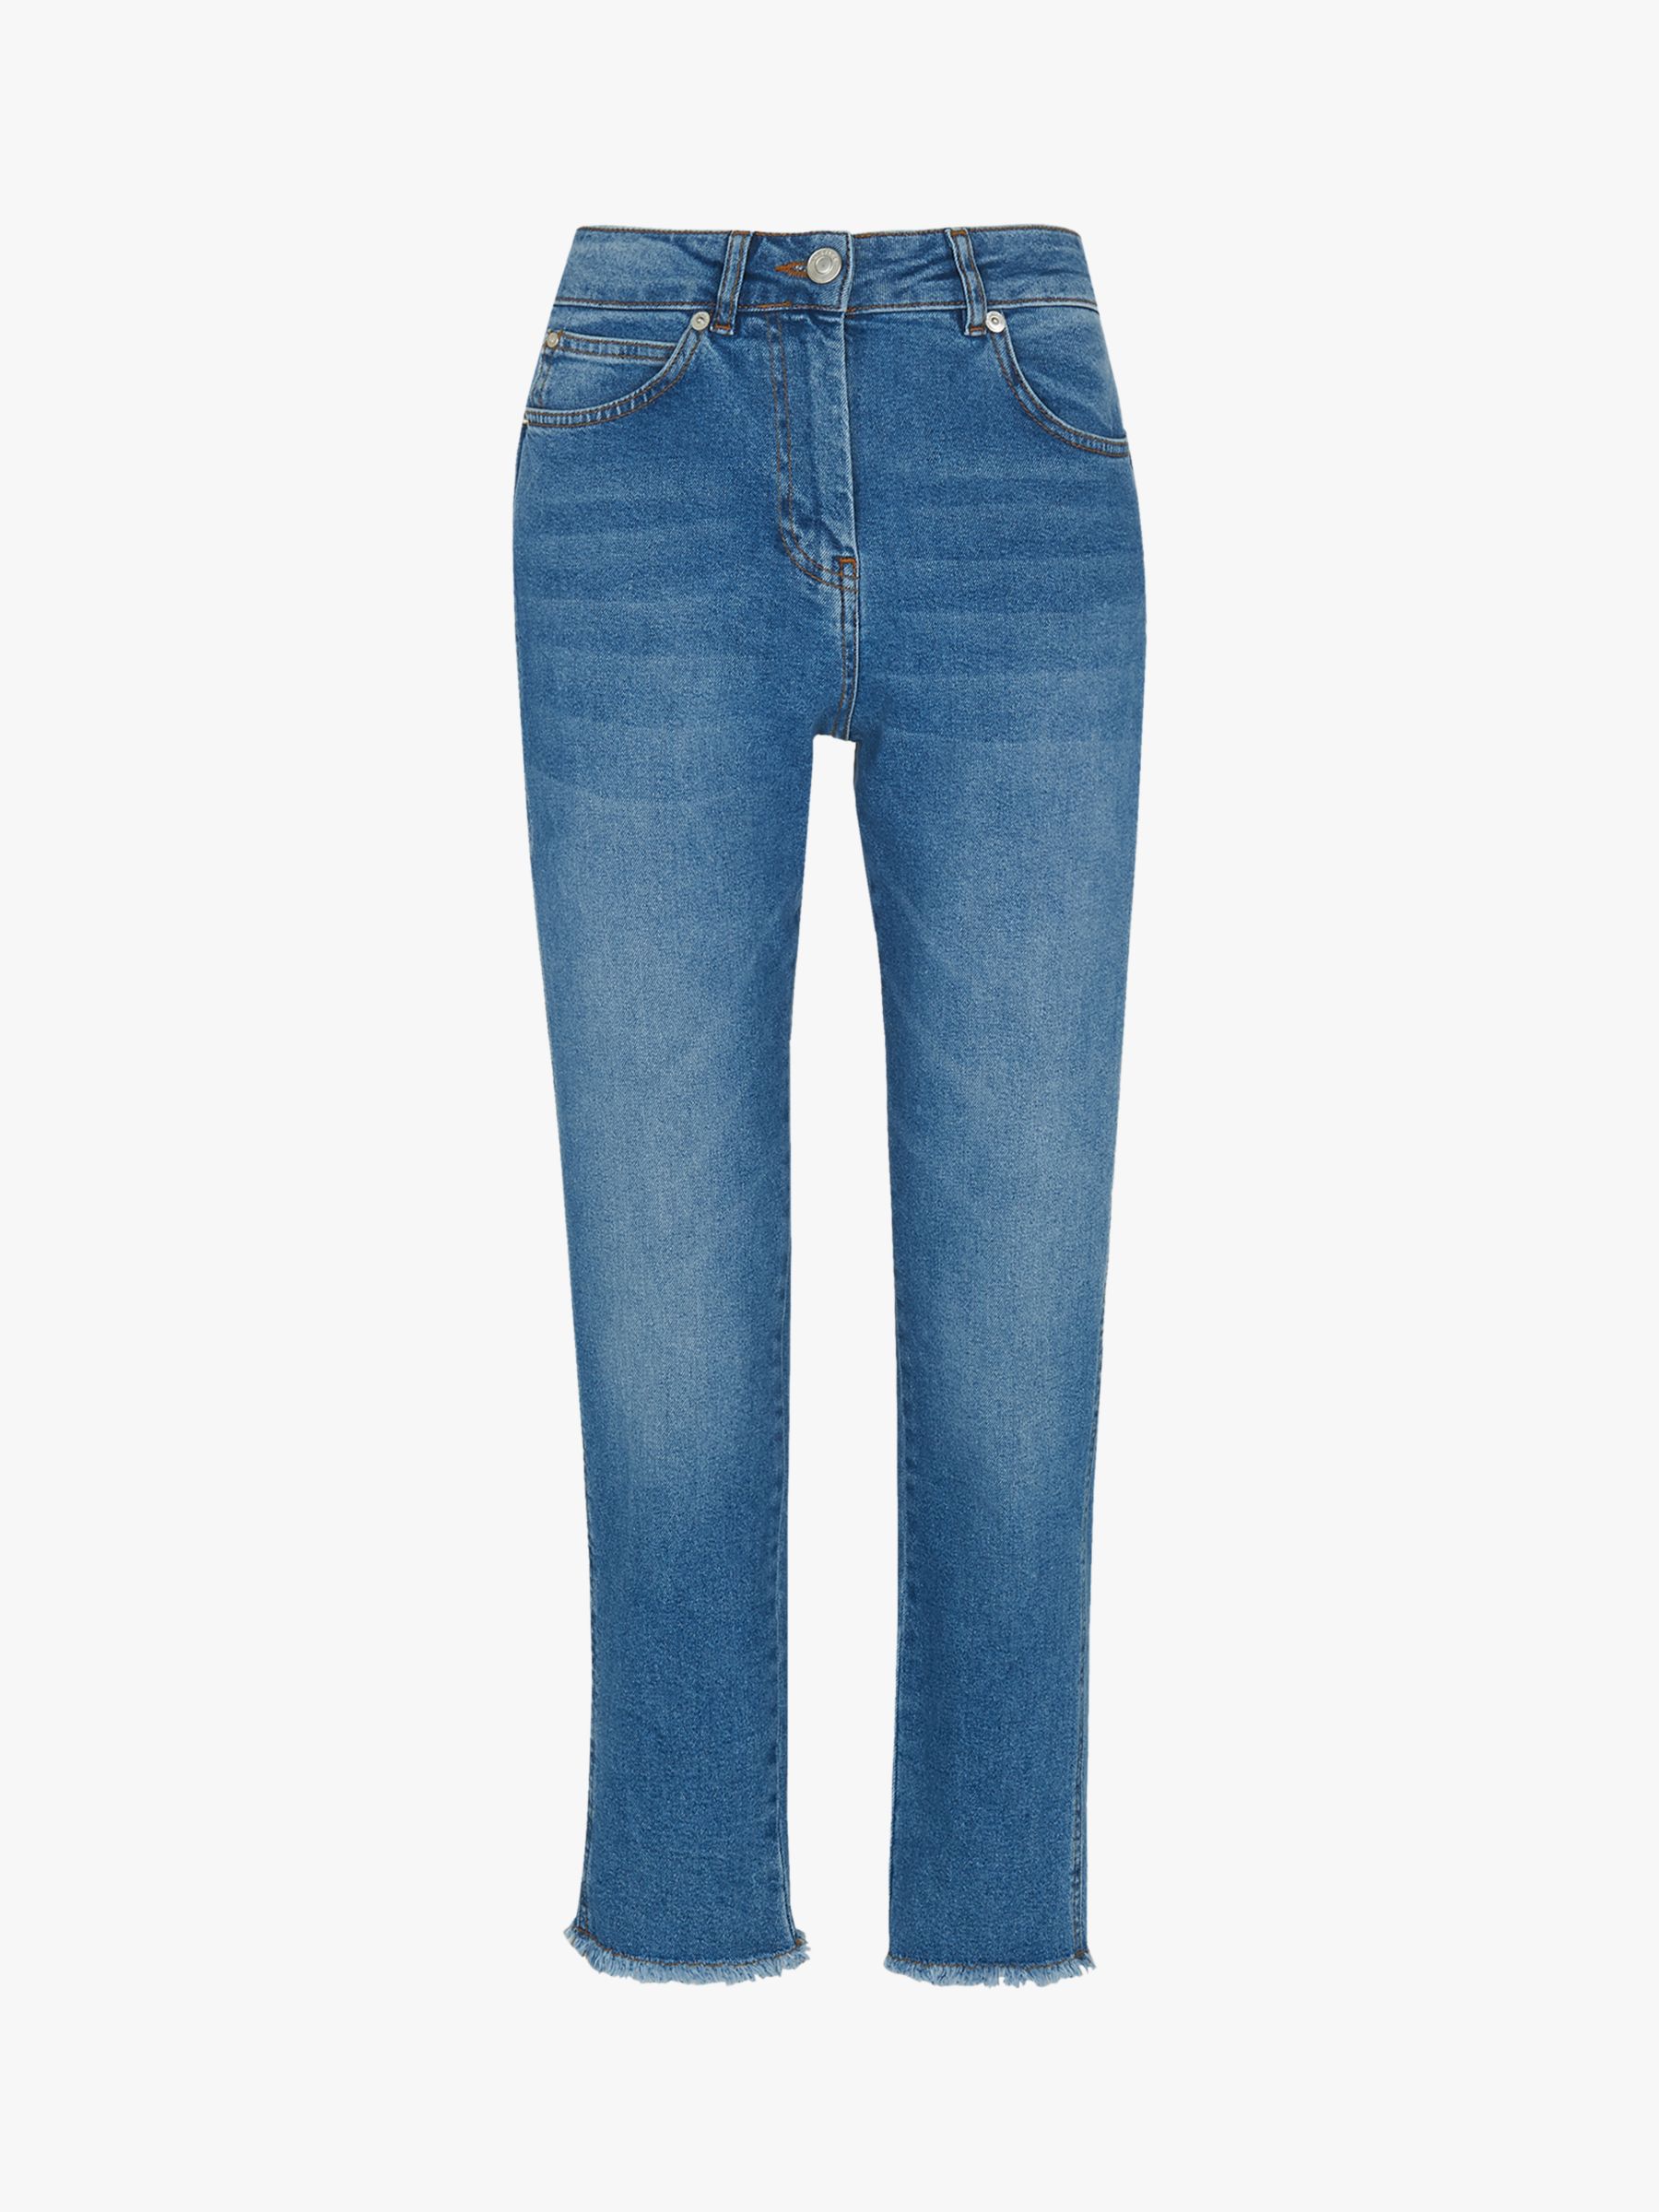 Whistles Slim Frayed Detail Jeans, Denim at John Lewis & Partners